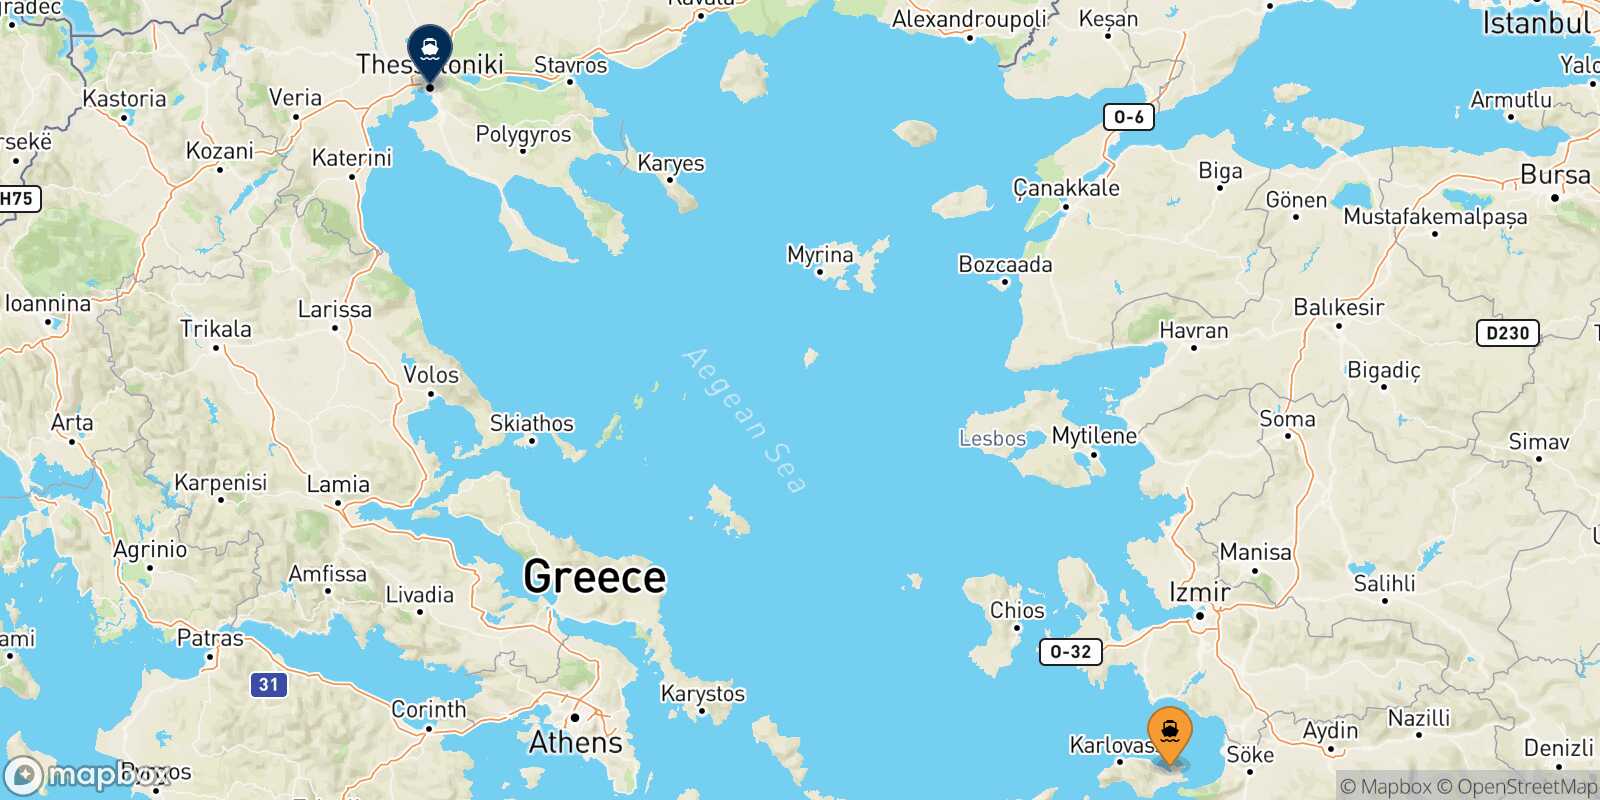 Vathi (Samos) Thessaloniki route map